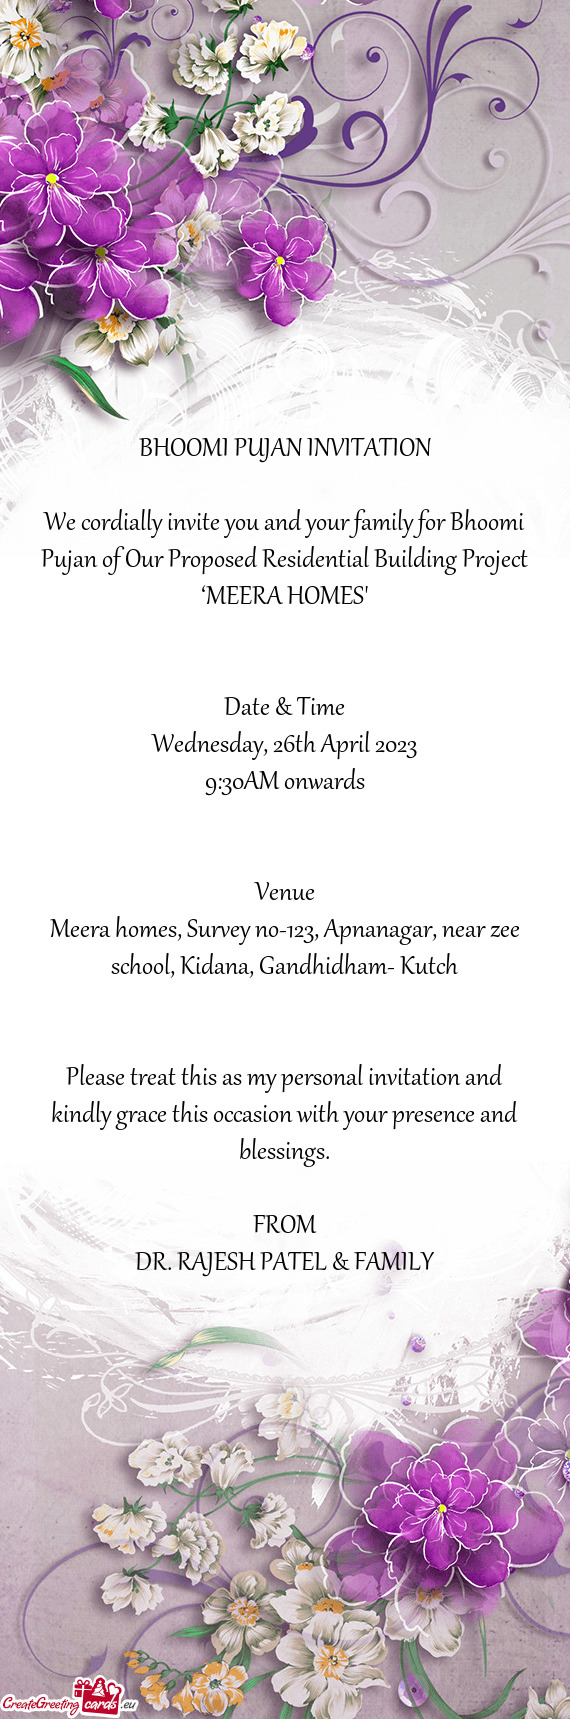 Meera homes, Survey no-123, Apnanagar, near zee school, Kidana, Gandhidham- Kutch